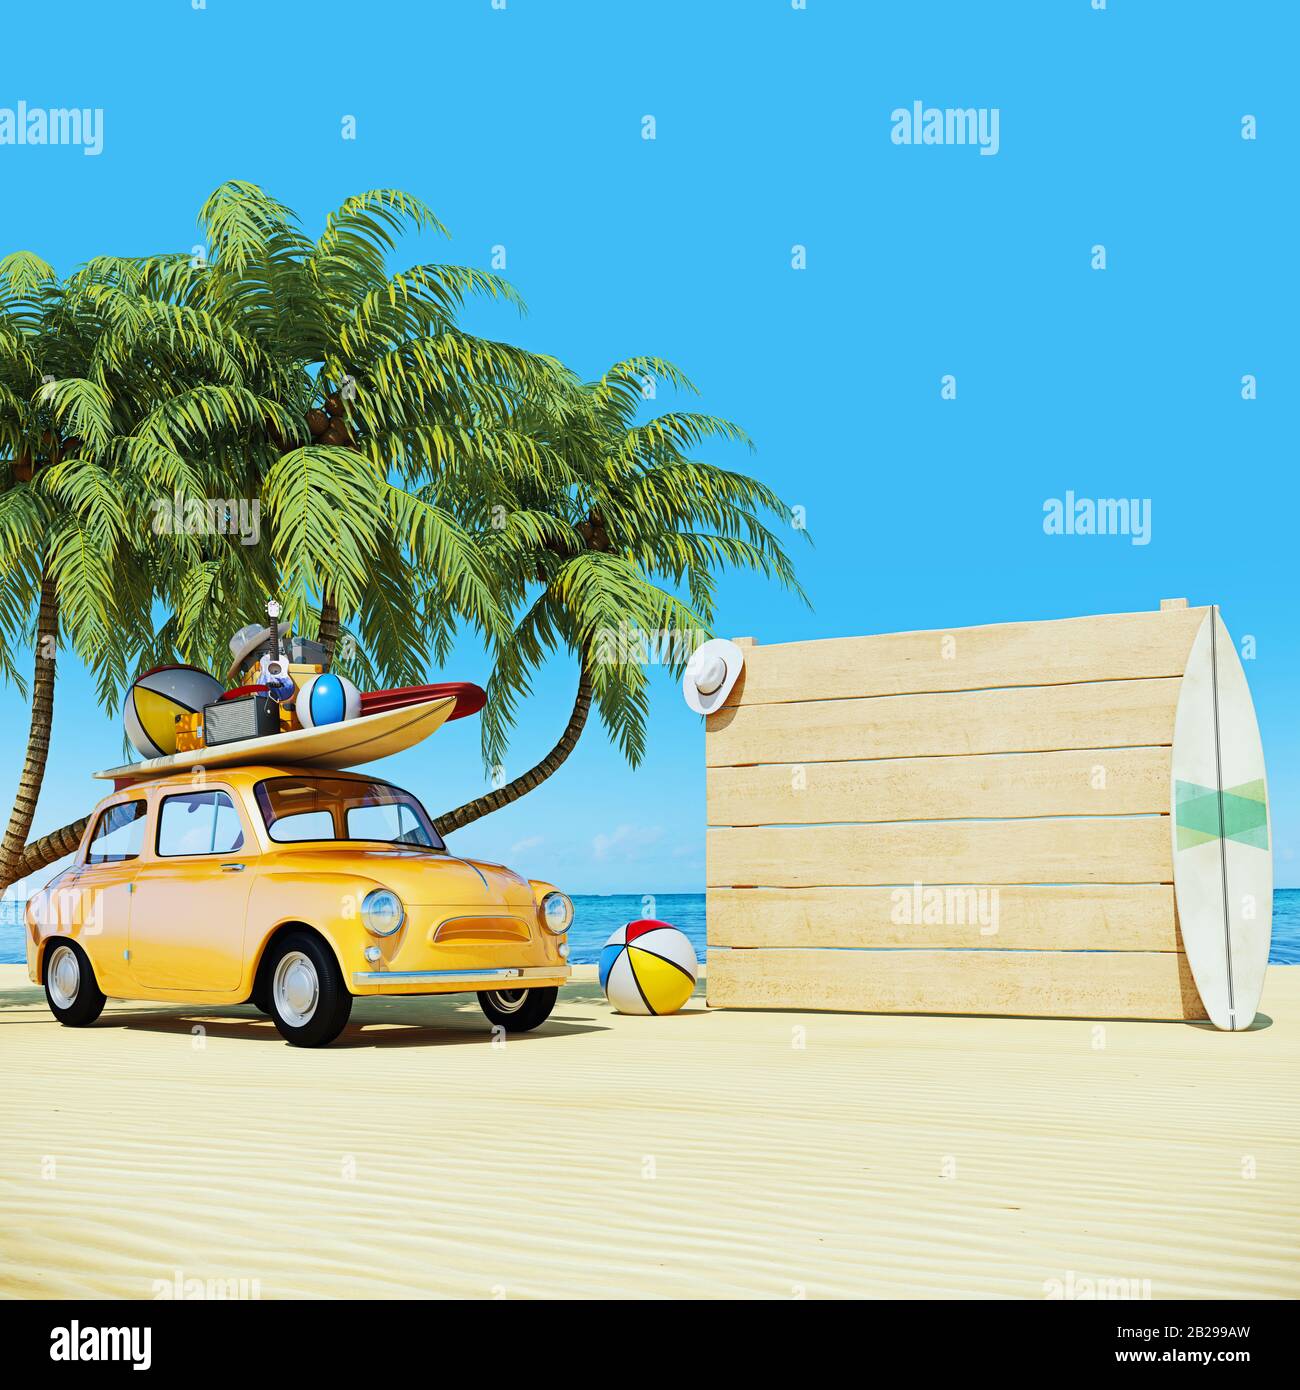 Surfboard and car on beach -Fotos und -Bildmaterial in hoher